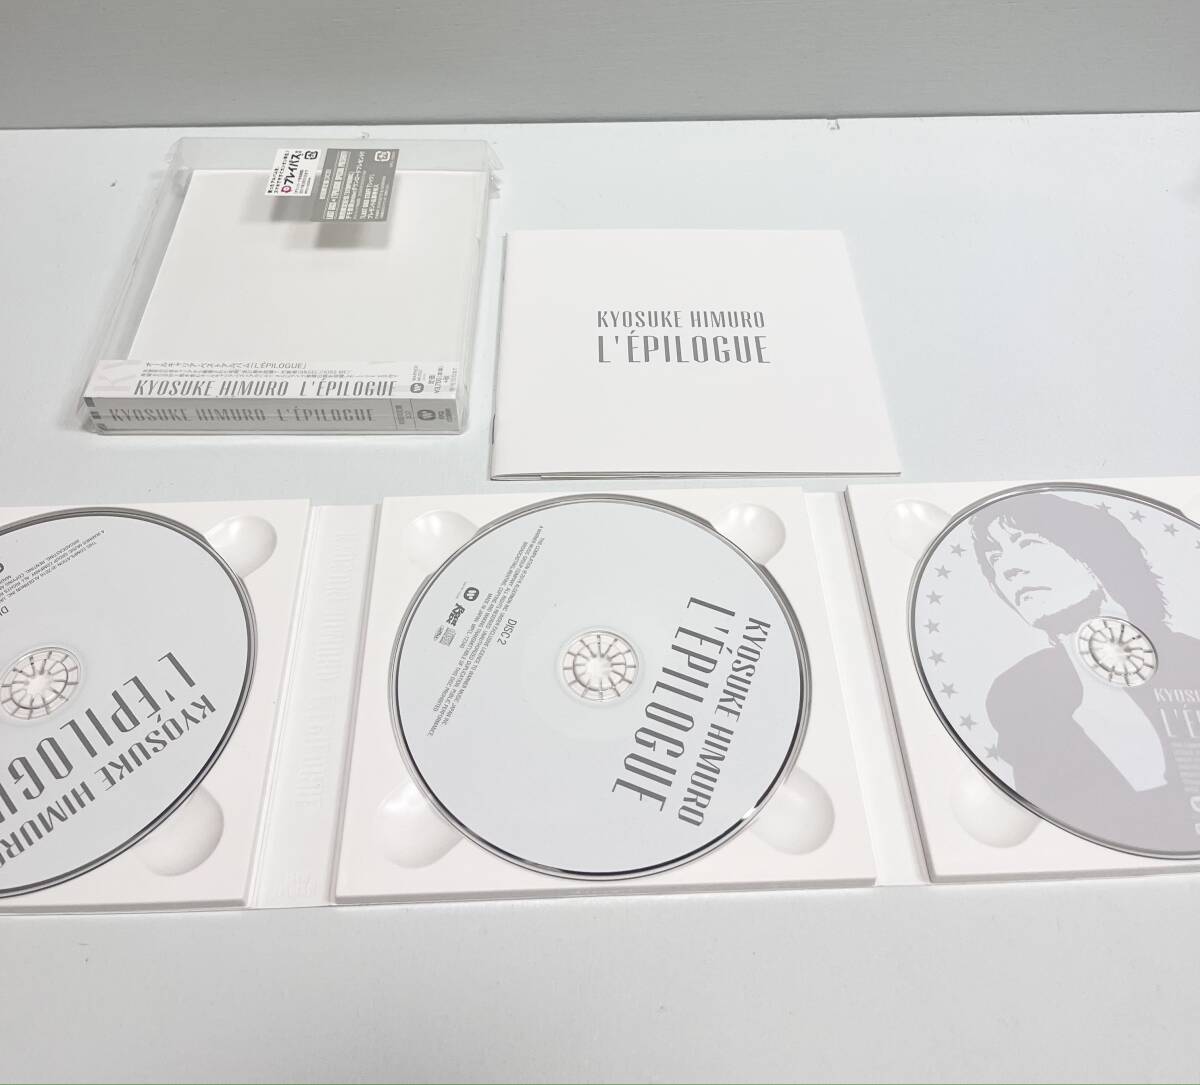 限定 良好 ♪ 氷室京介 CD L'EPILOGUE 初回生産限定盤 KYOSUKE HIMURO 3枚組 の画像3